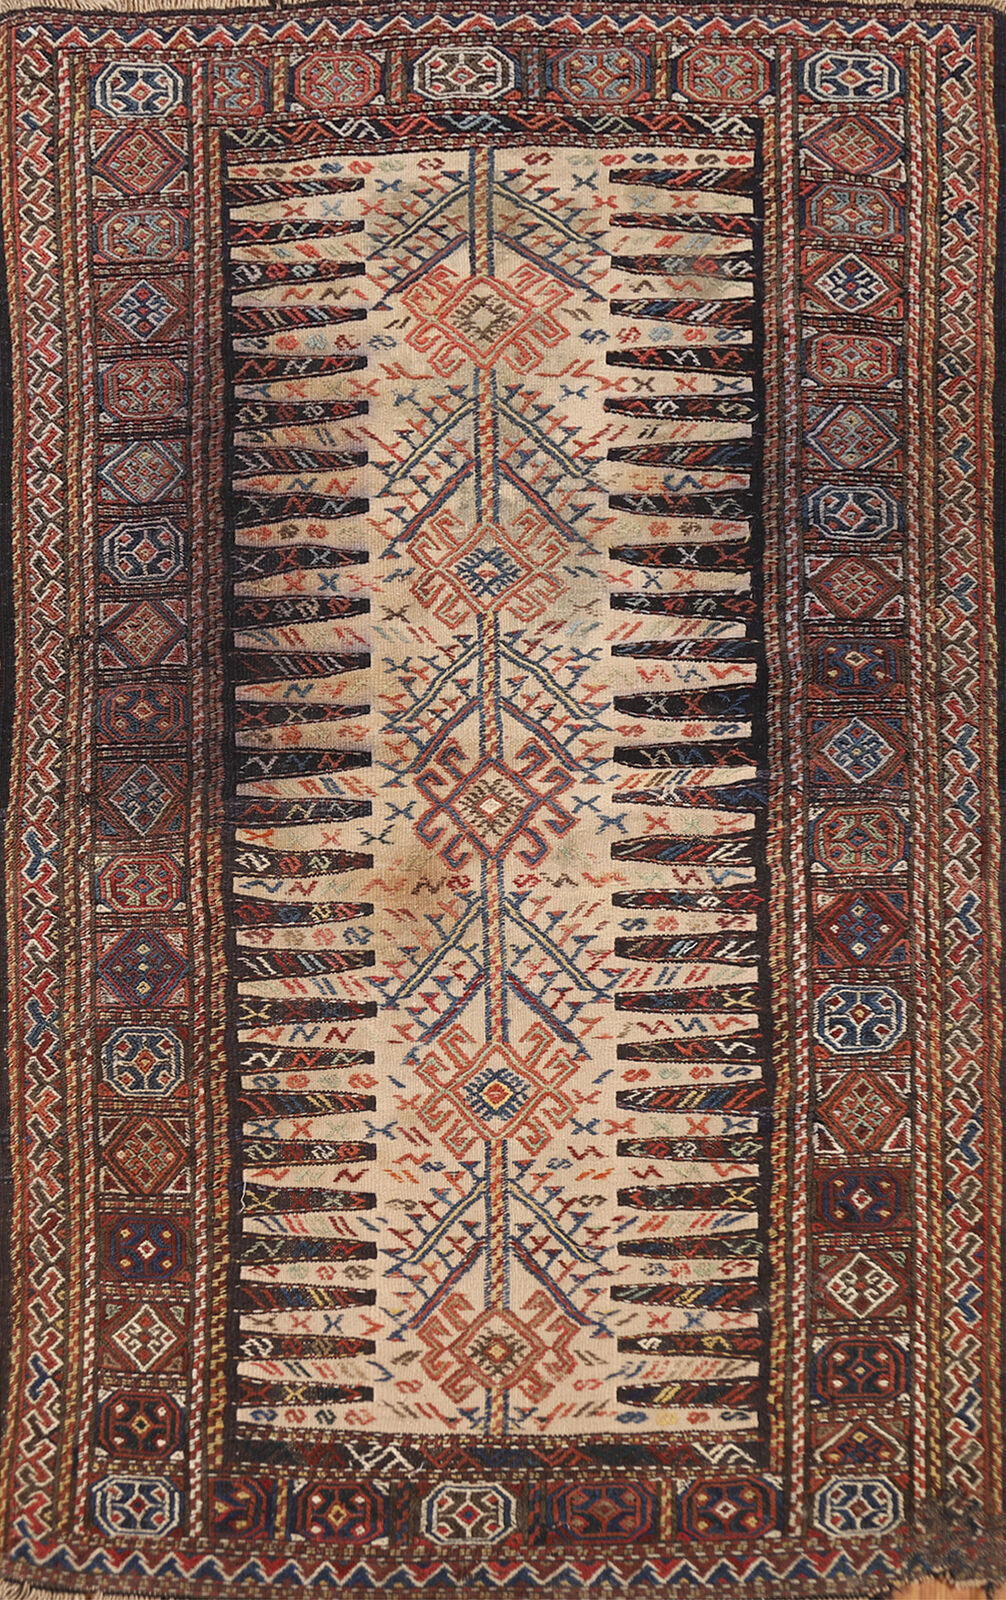 Vintage Tribal Geometric Ivory Kilim Accent Rug 3x5 Wool Hand-woven Carpet